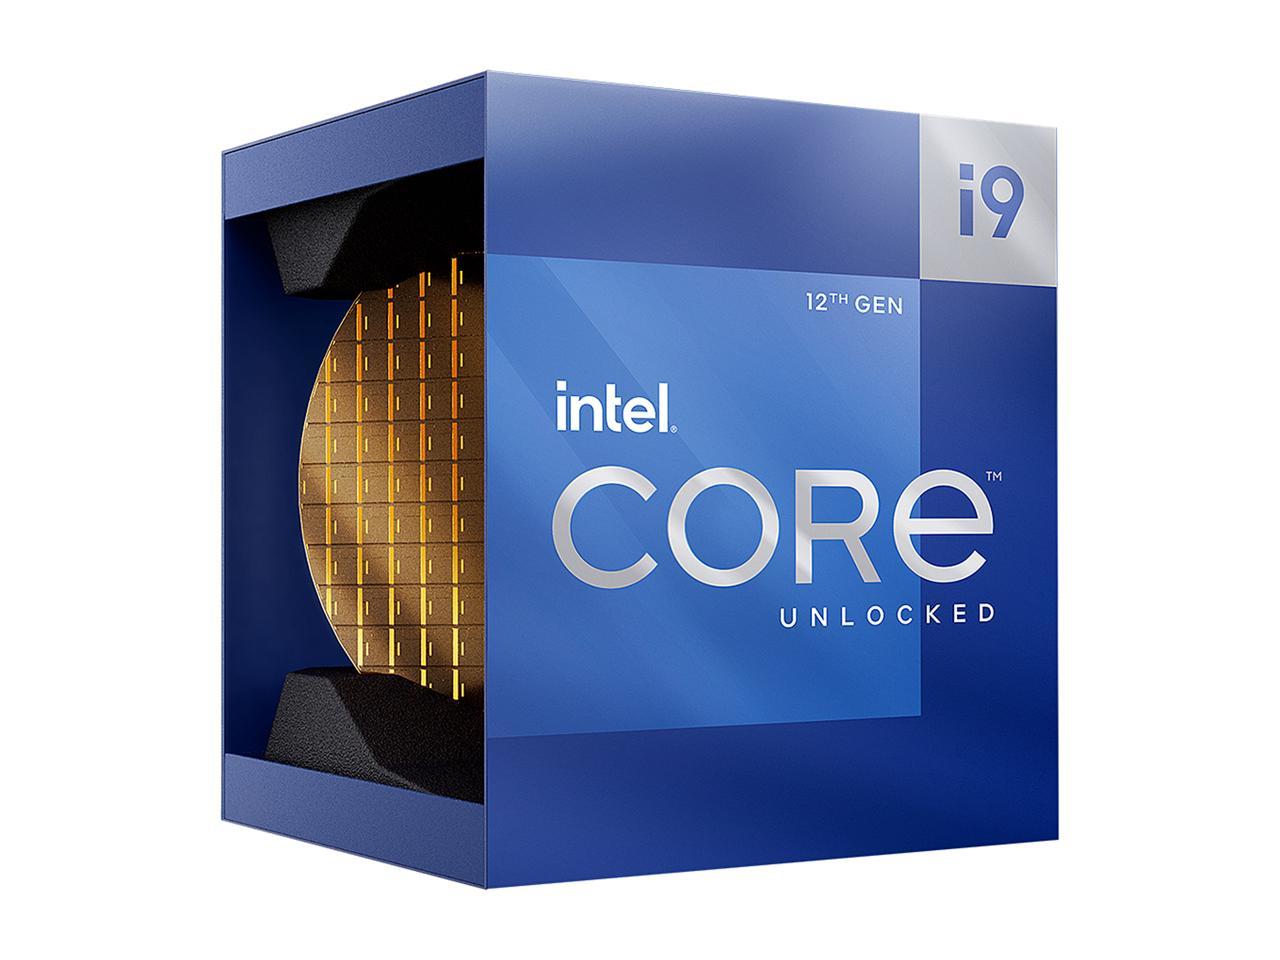 Intel Core I9 12900k LGA 1700 Processor $484.99 after promo code @ Newegg